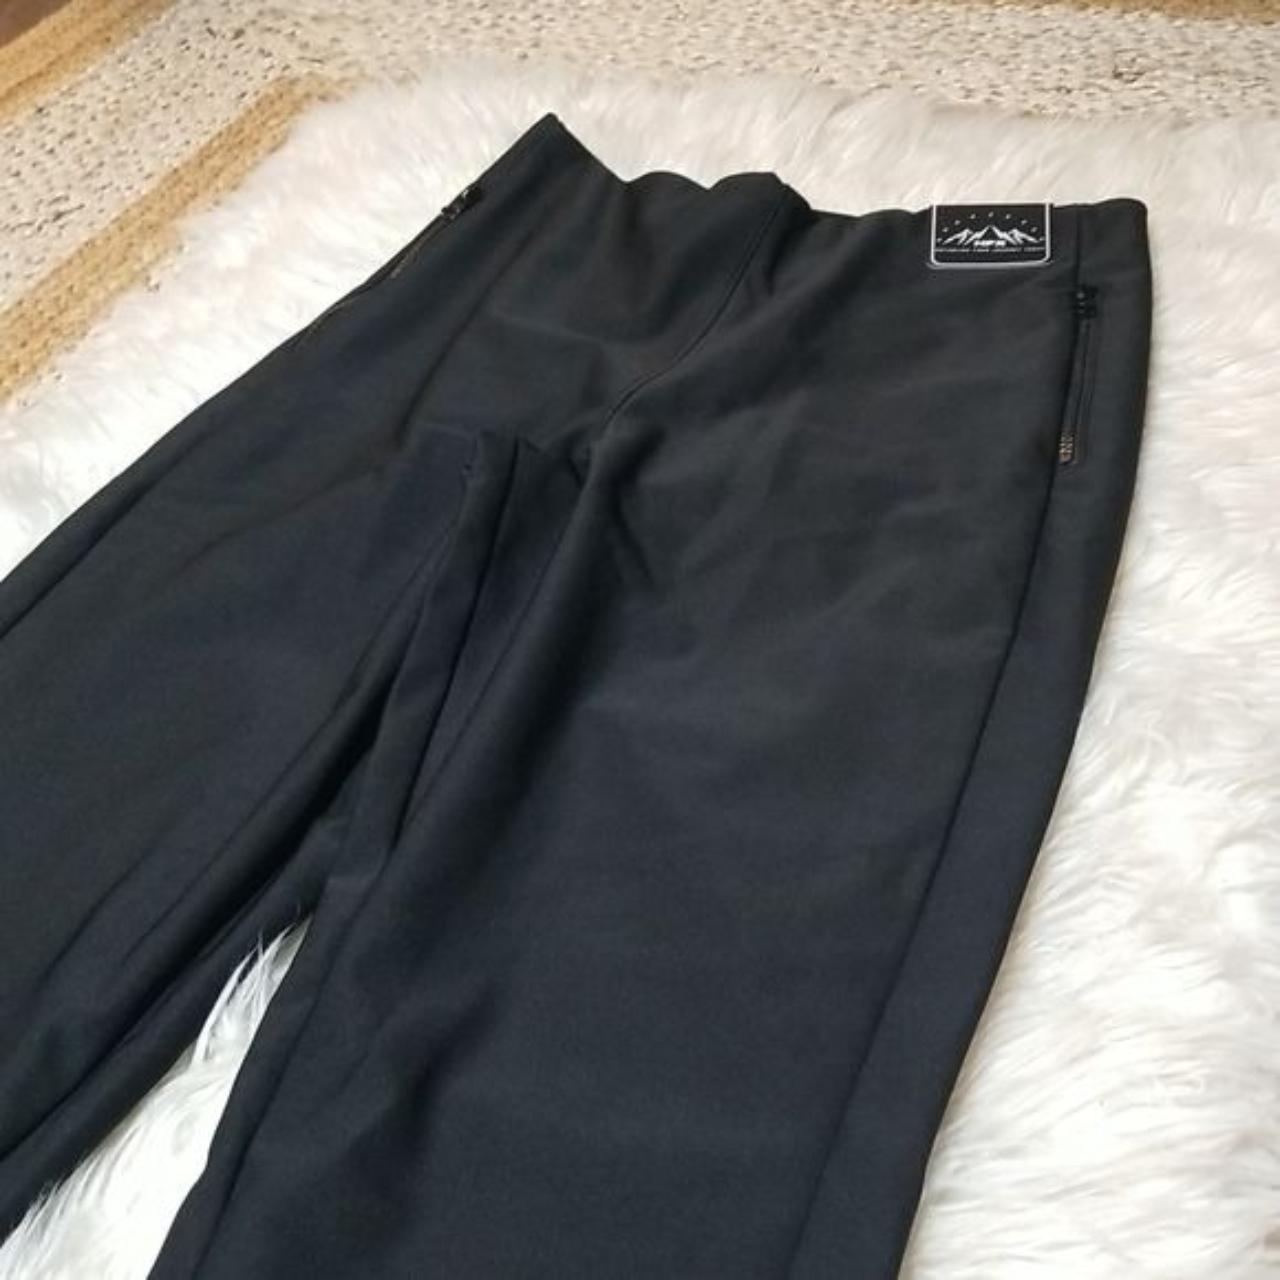 Product Image 3 - HFX Black Winter Tech Pants